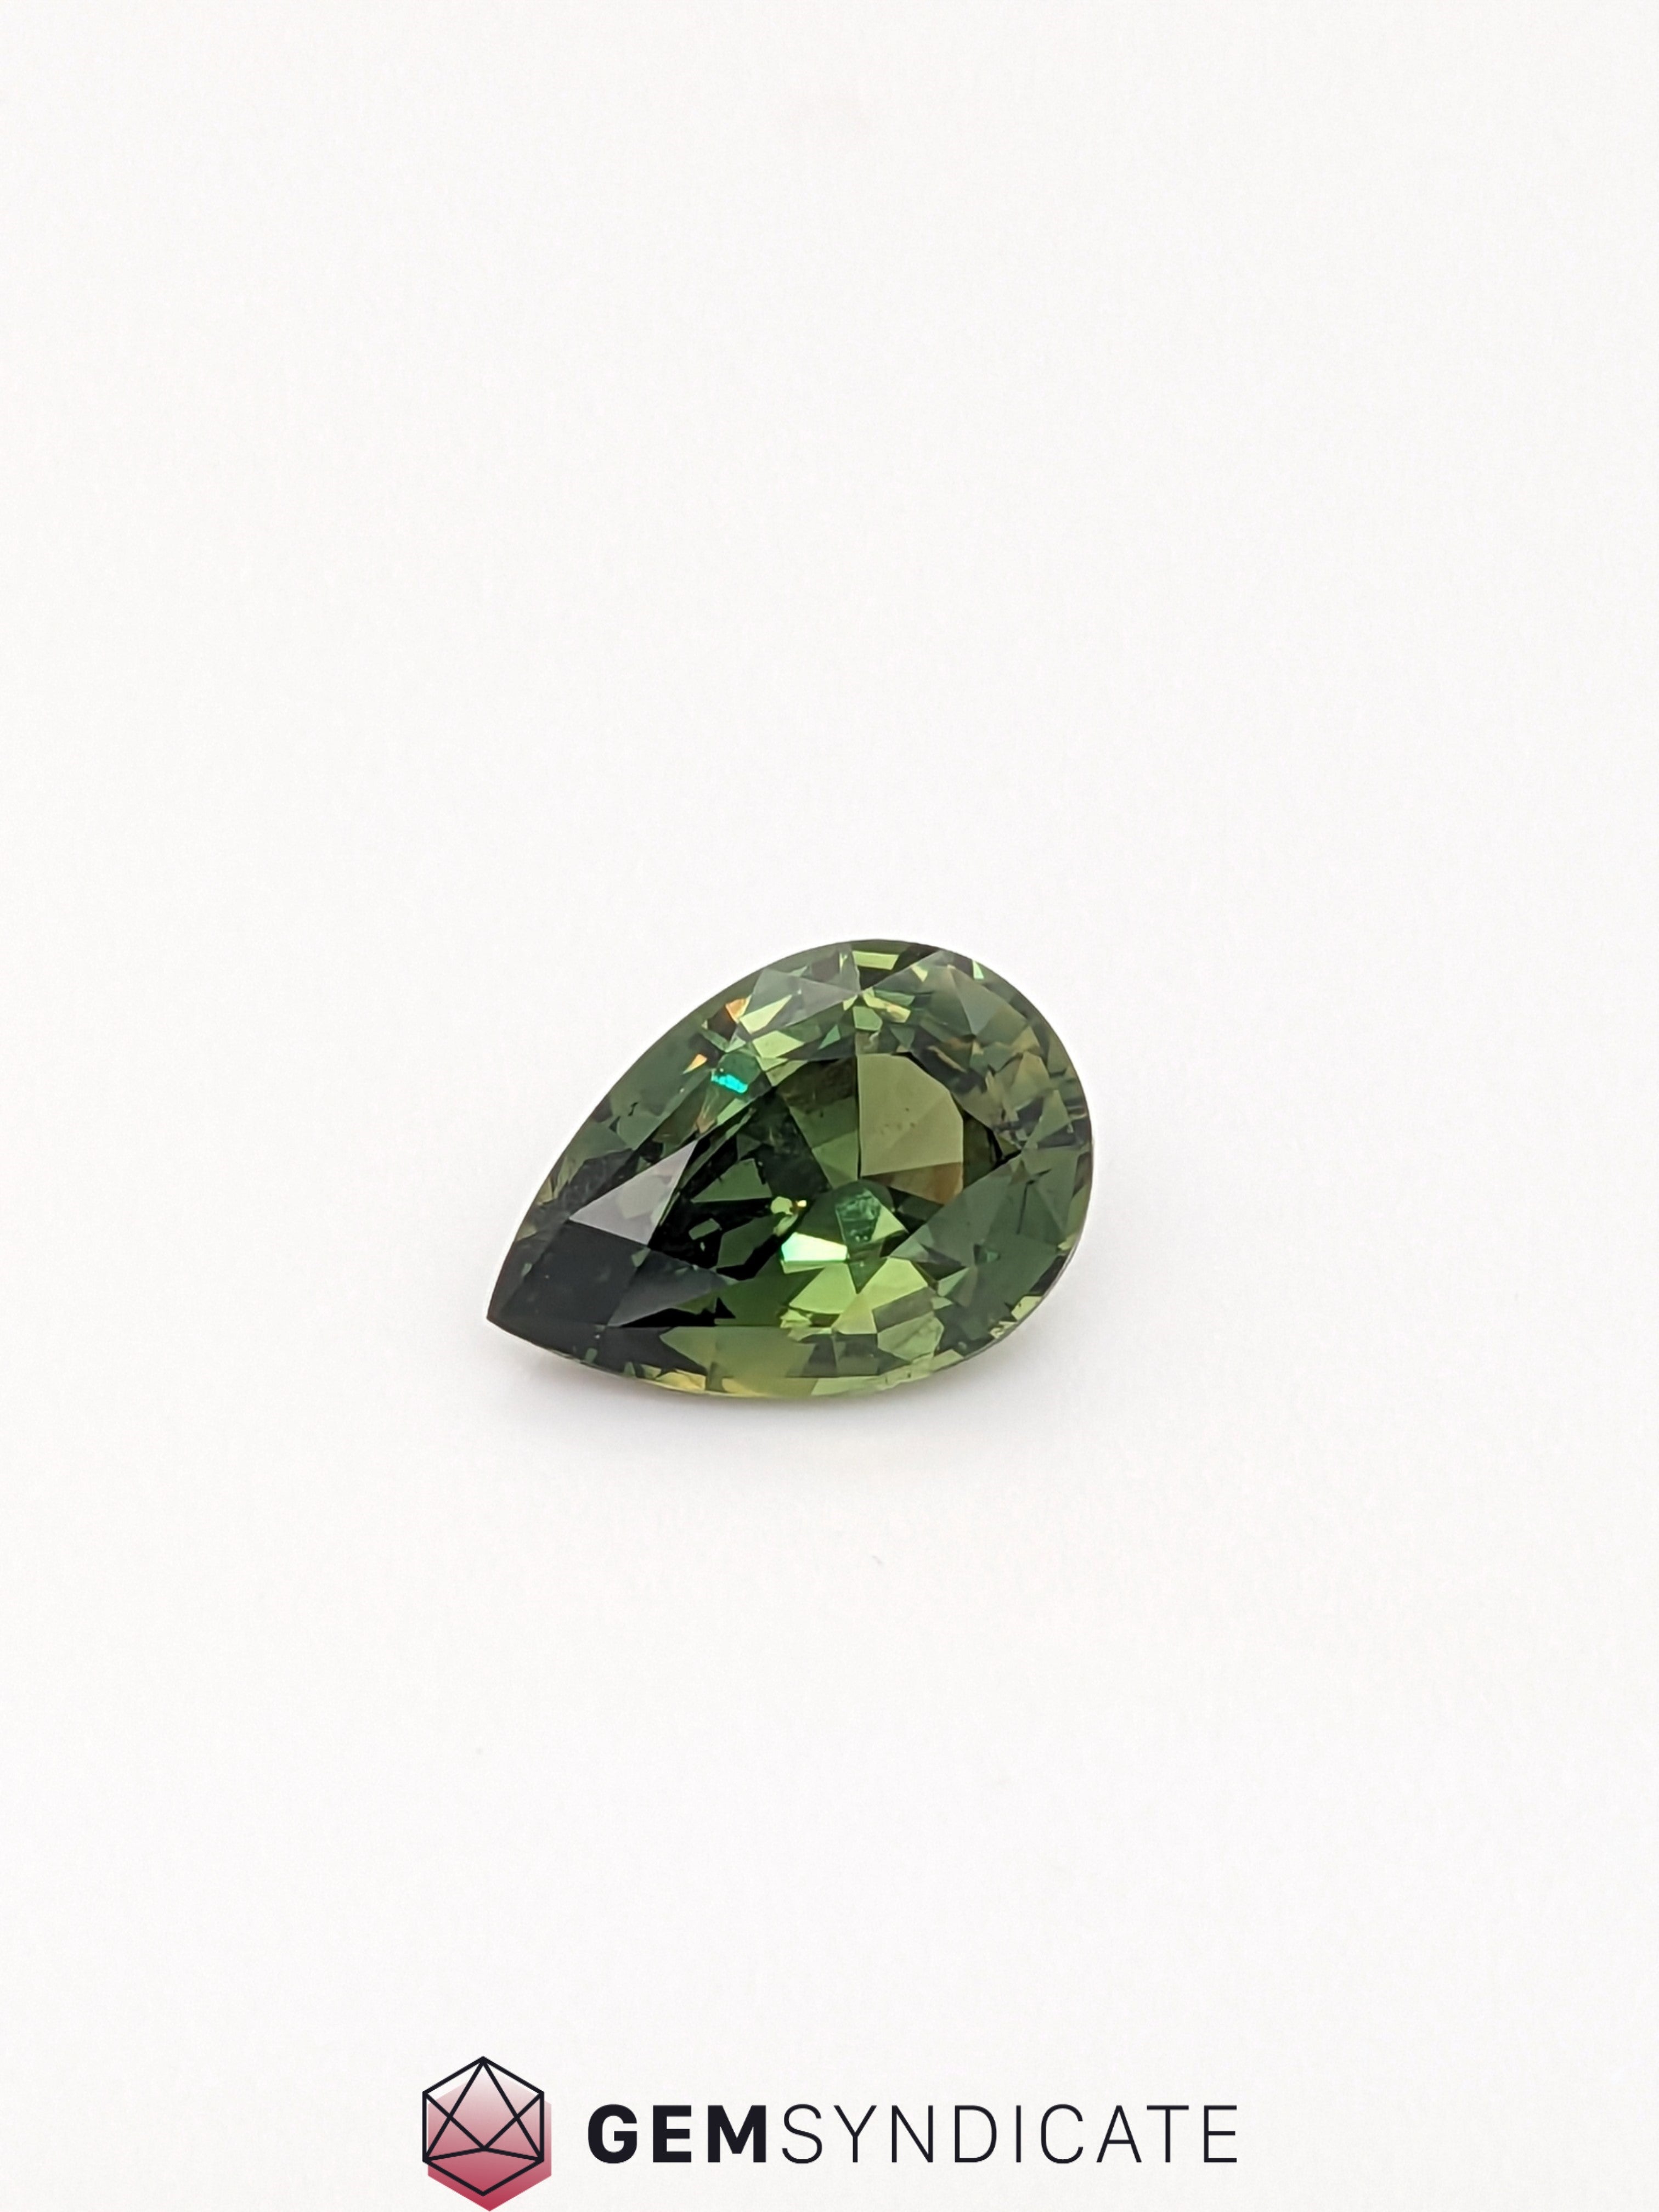 Glistening Pear-Shaped Green Sapphire 2.76ct